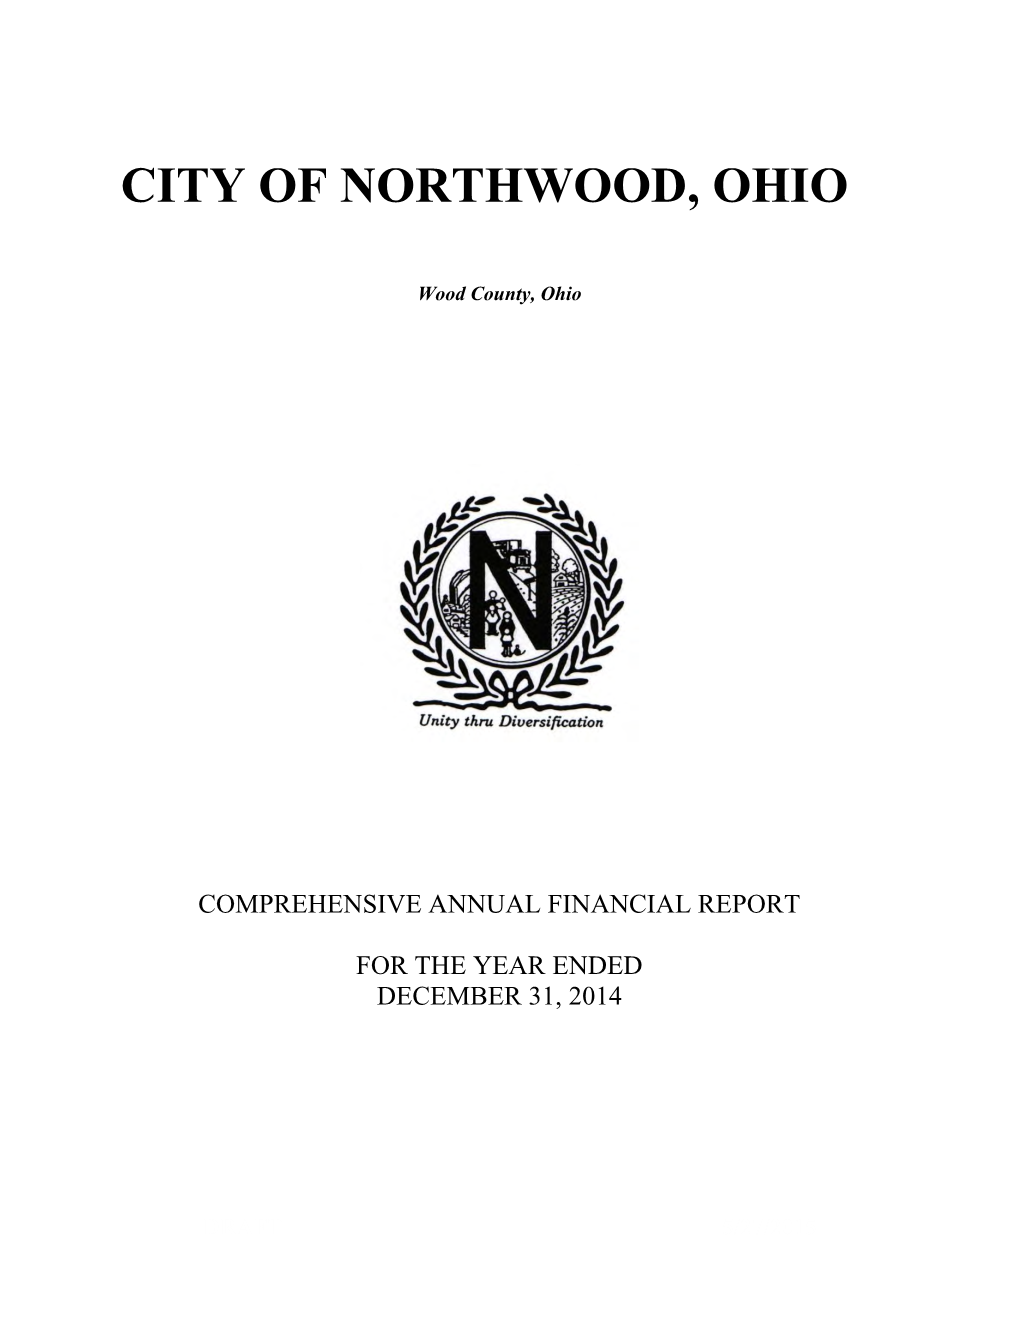 City of Northwood, Ohio